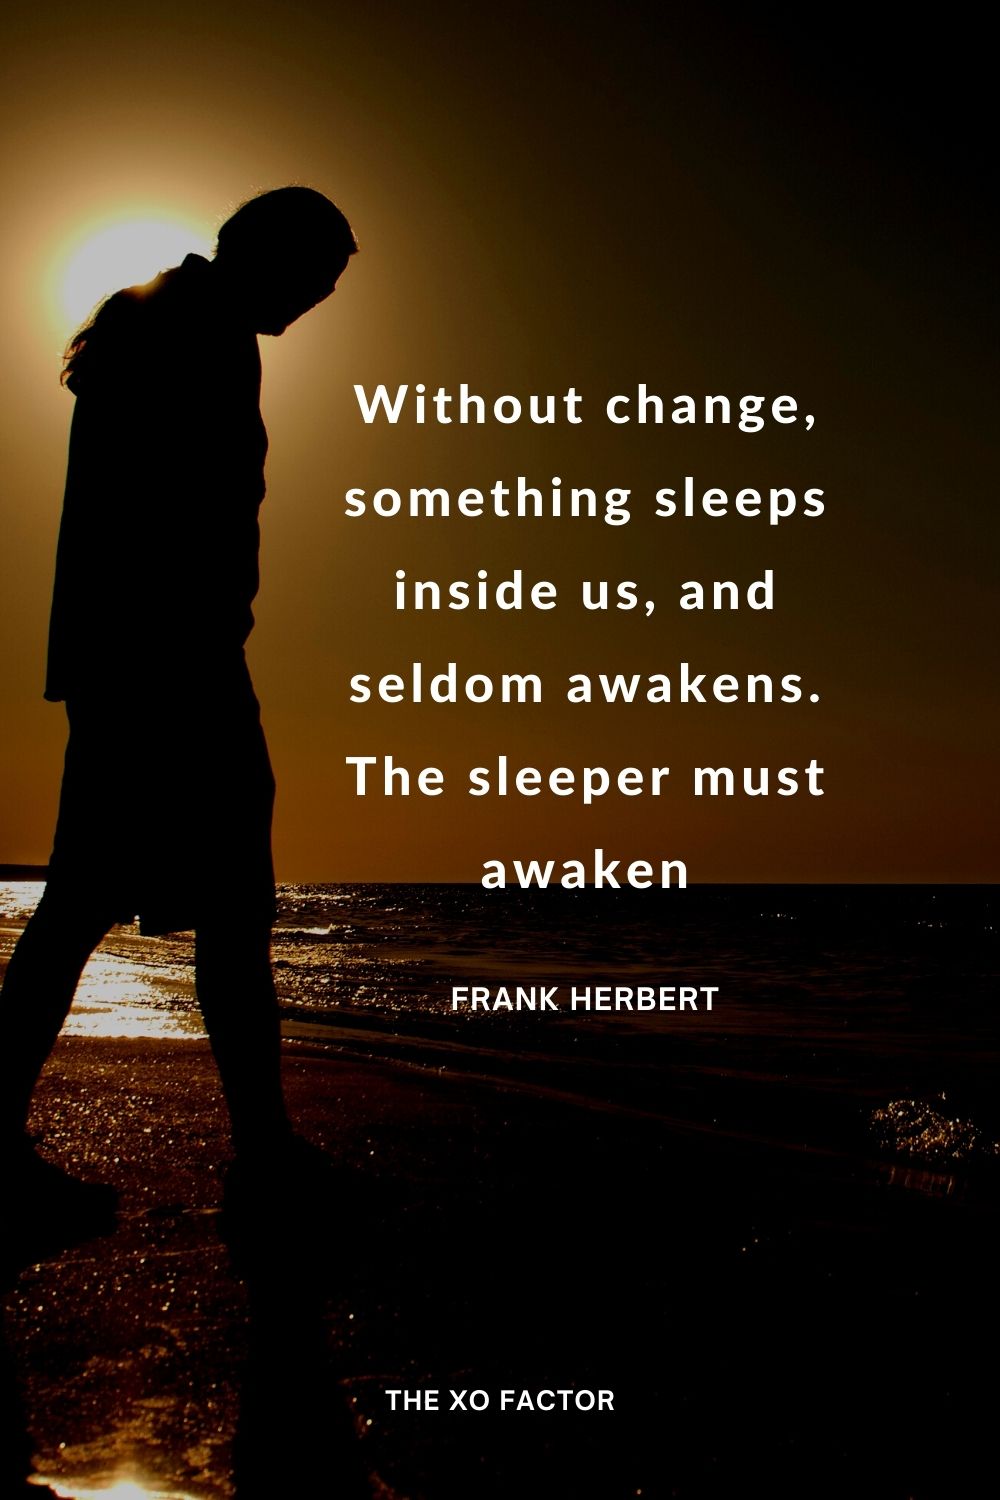 Without change, something sleeps inside us, and seldom awakens. The sleeper must awaken